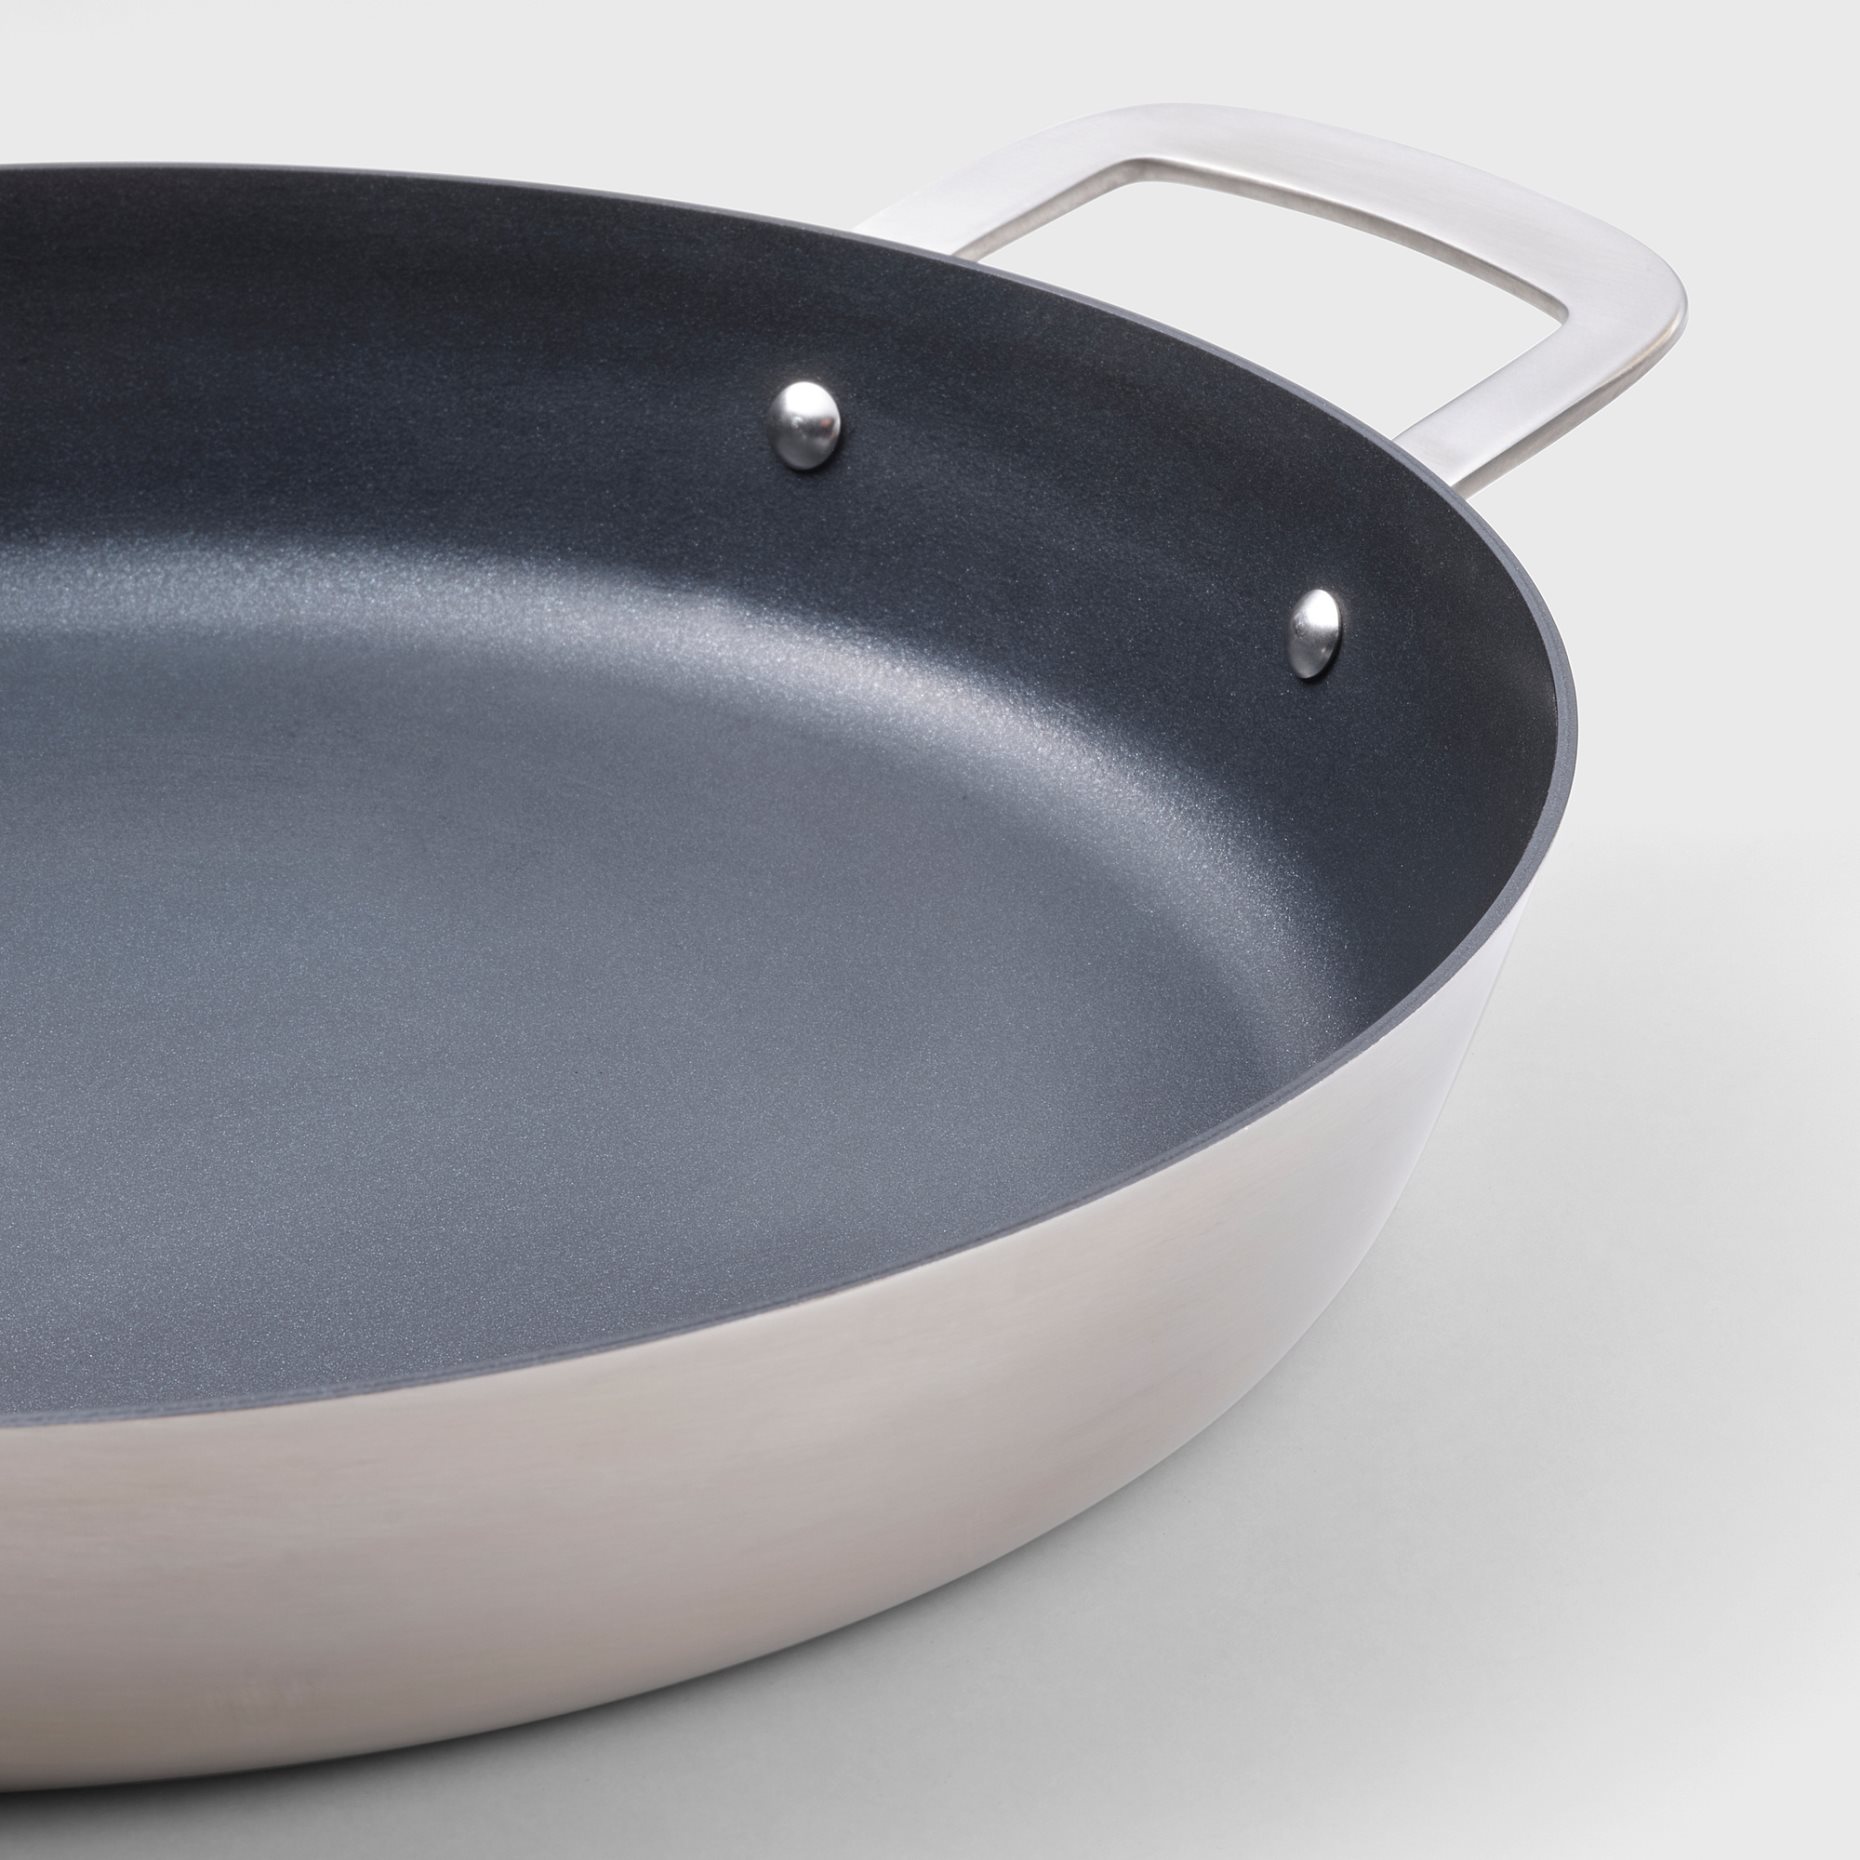 HEMKOMST, frying pan/non-stick coating, 32 cm, 205.131.36